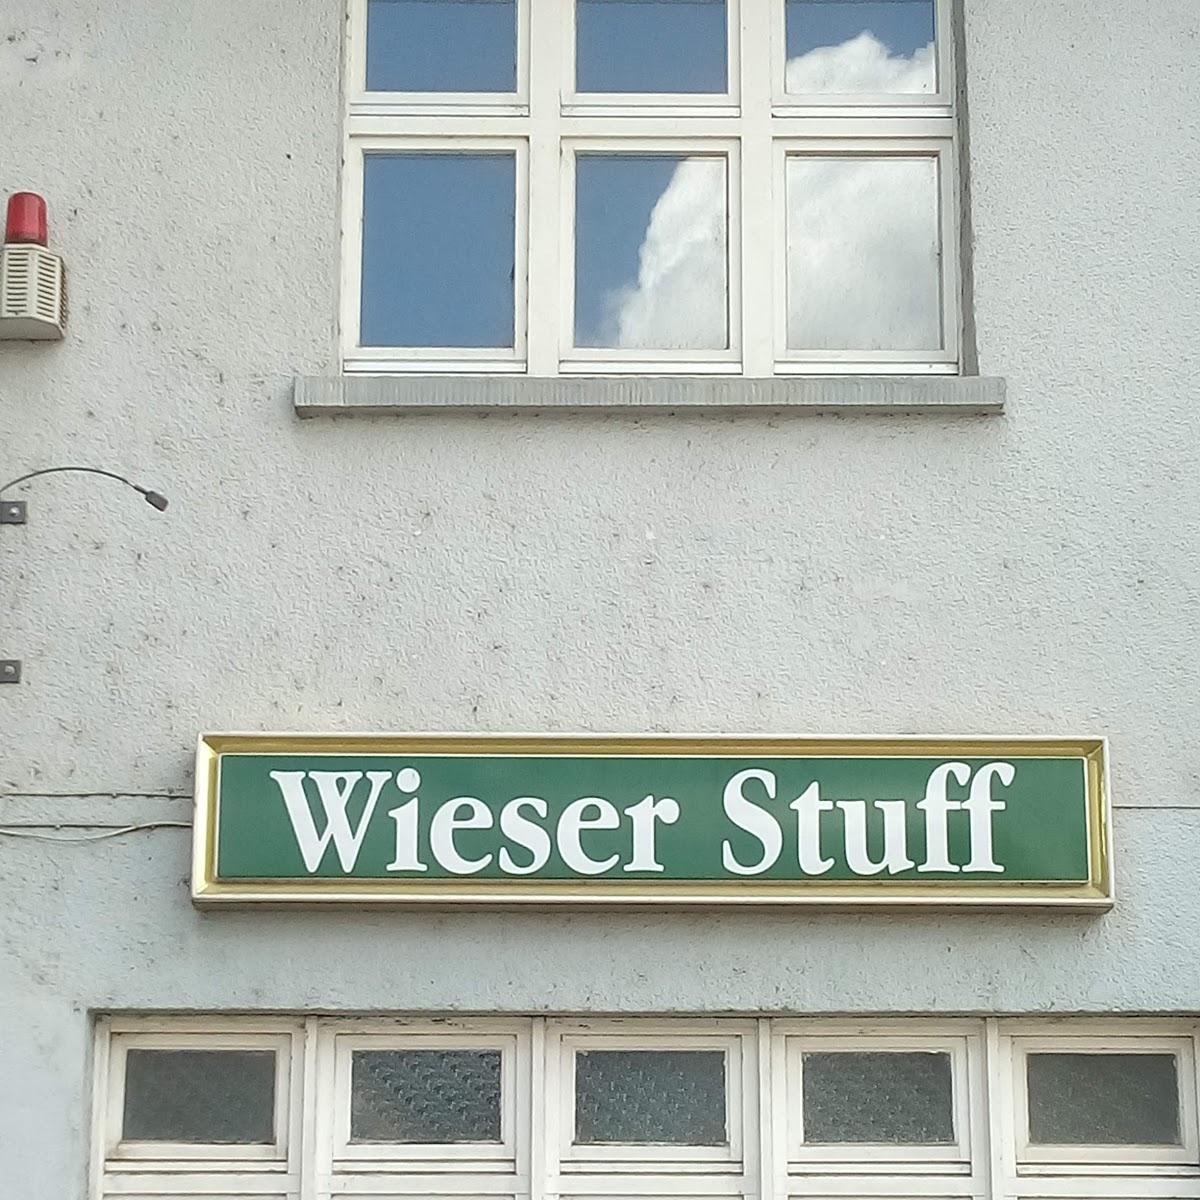 Restaurant "Wieser Stuff" in Perl